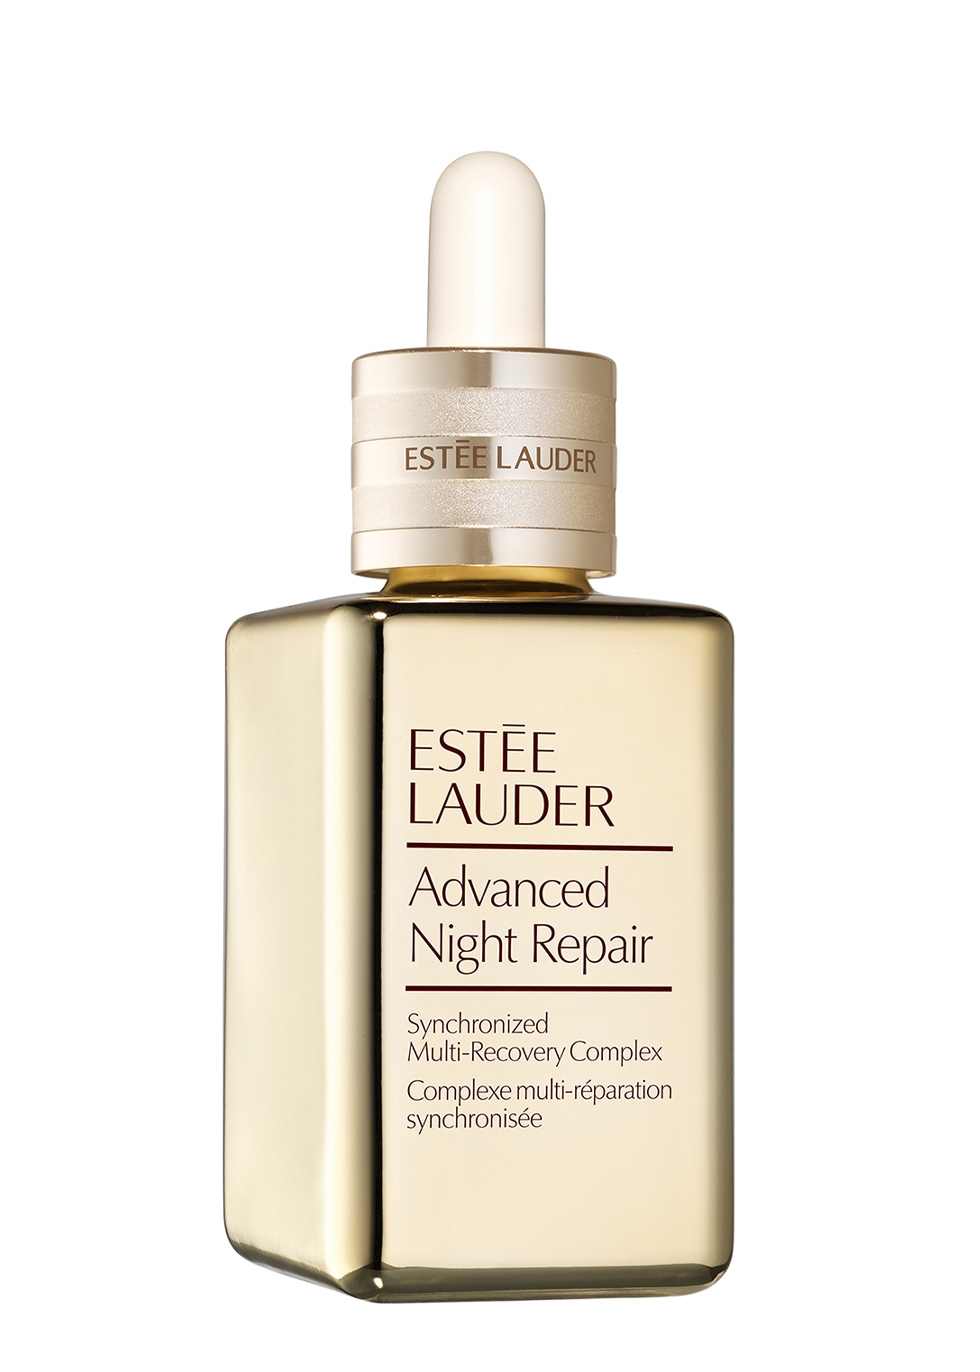 Estée Lauder Advanced Night Repair Synchronized Multi-Recovery Complex in Gold Bottle 50ml - Harvey Nichols